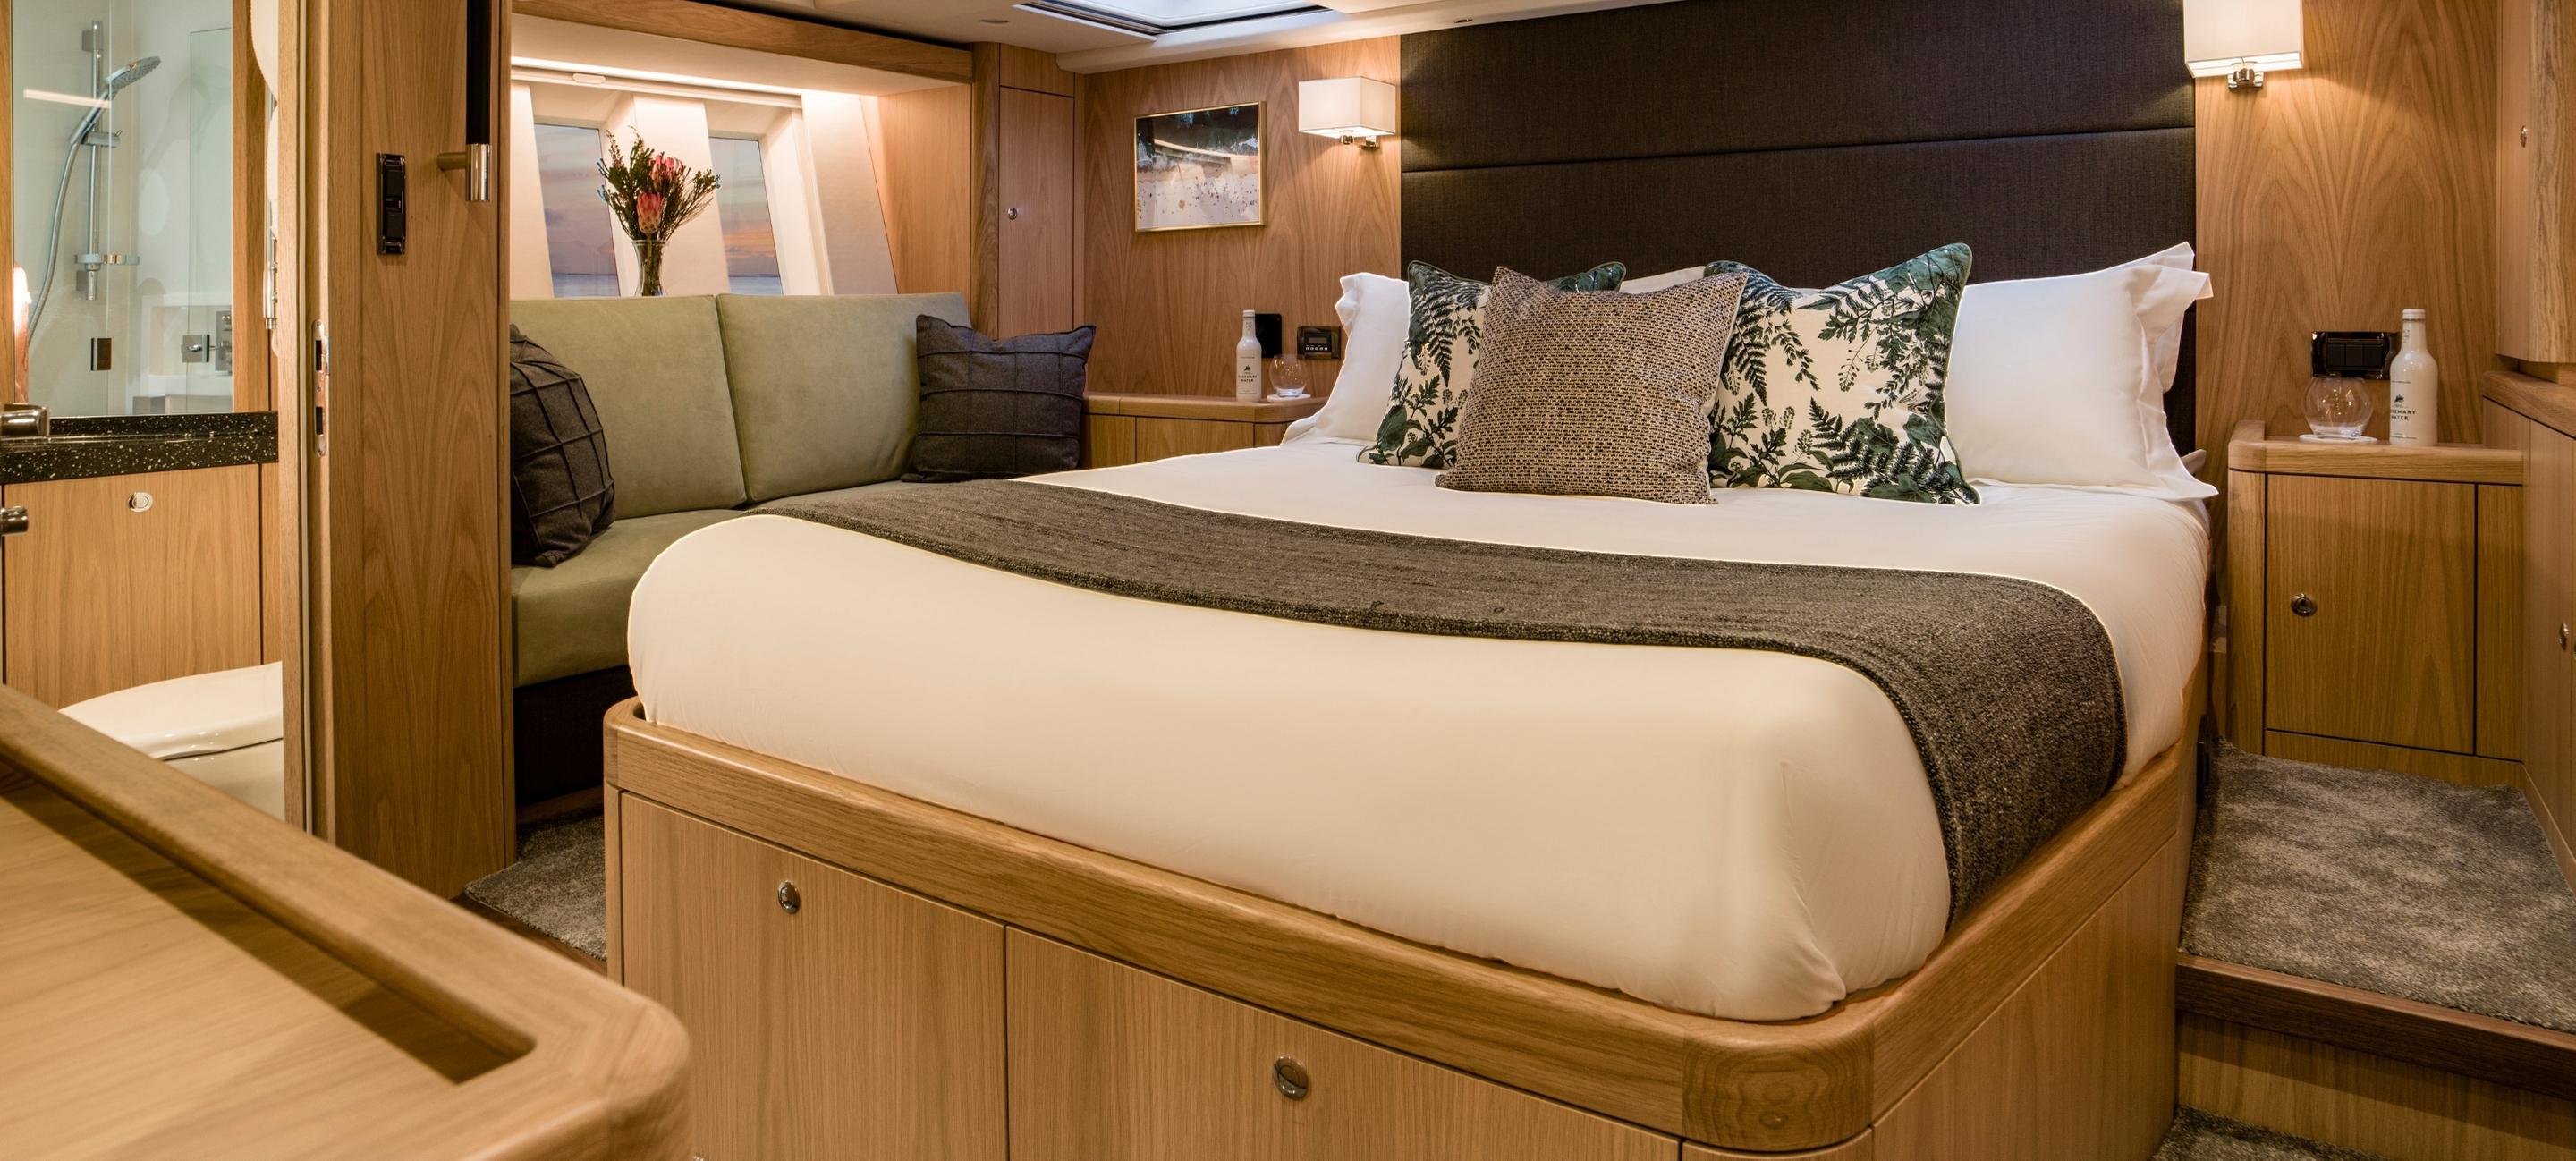 one bedroom yacht